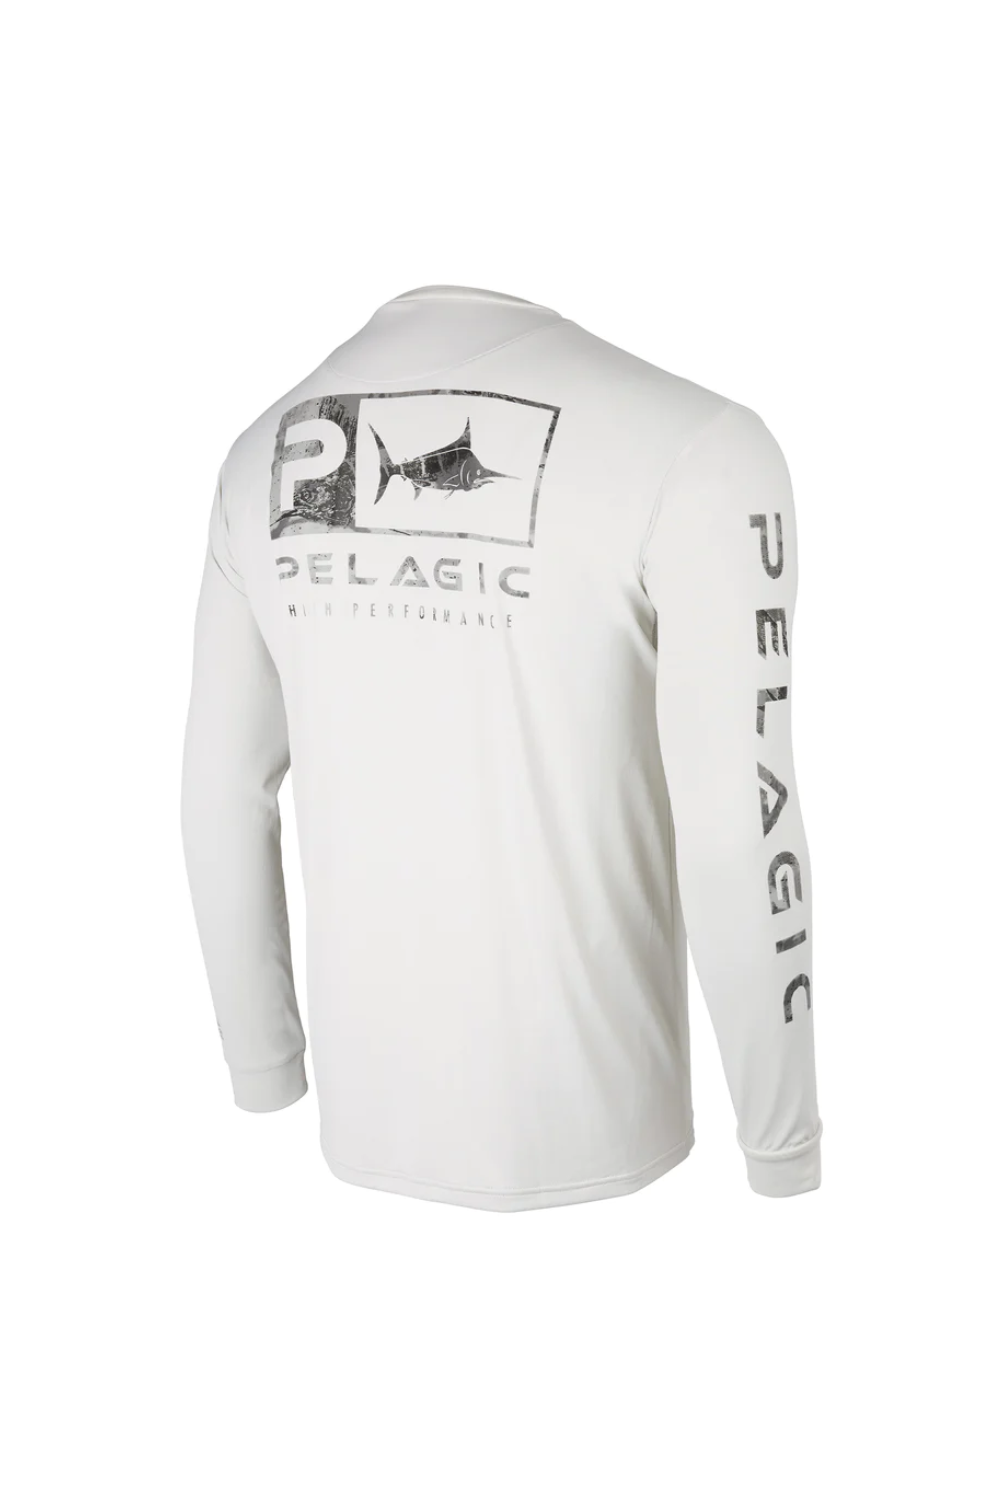 Pelagic Aquatek Icon - Open Seas Camo Men's Long Sleeve Shirt